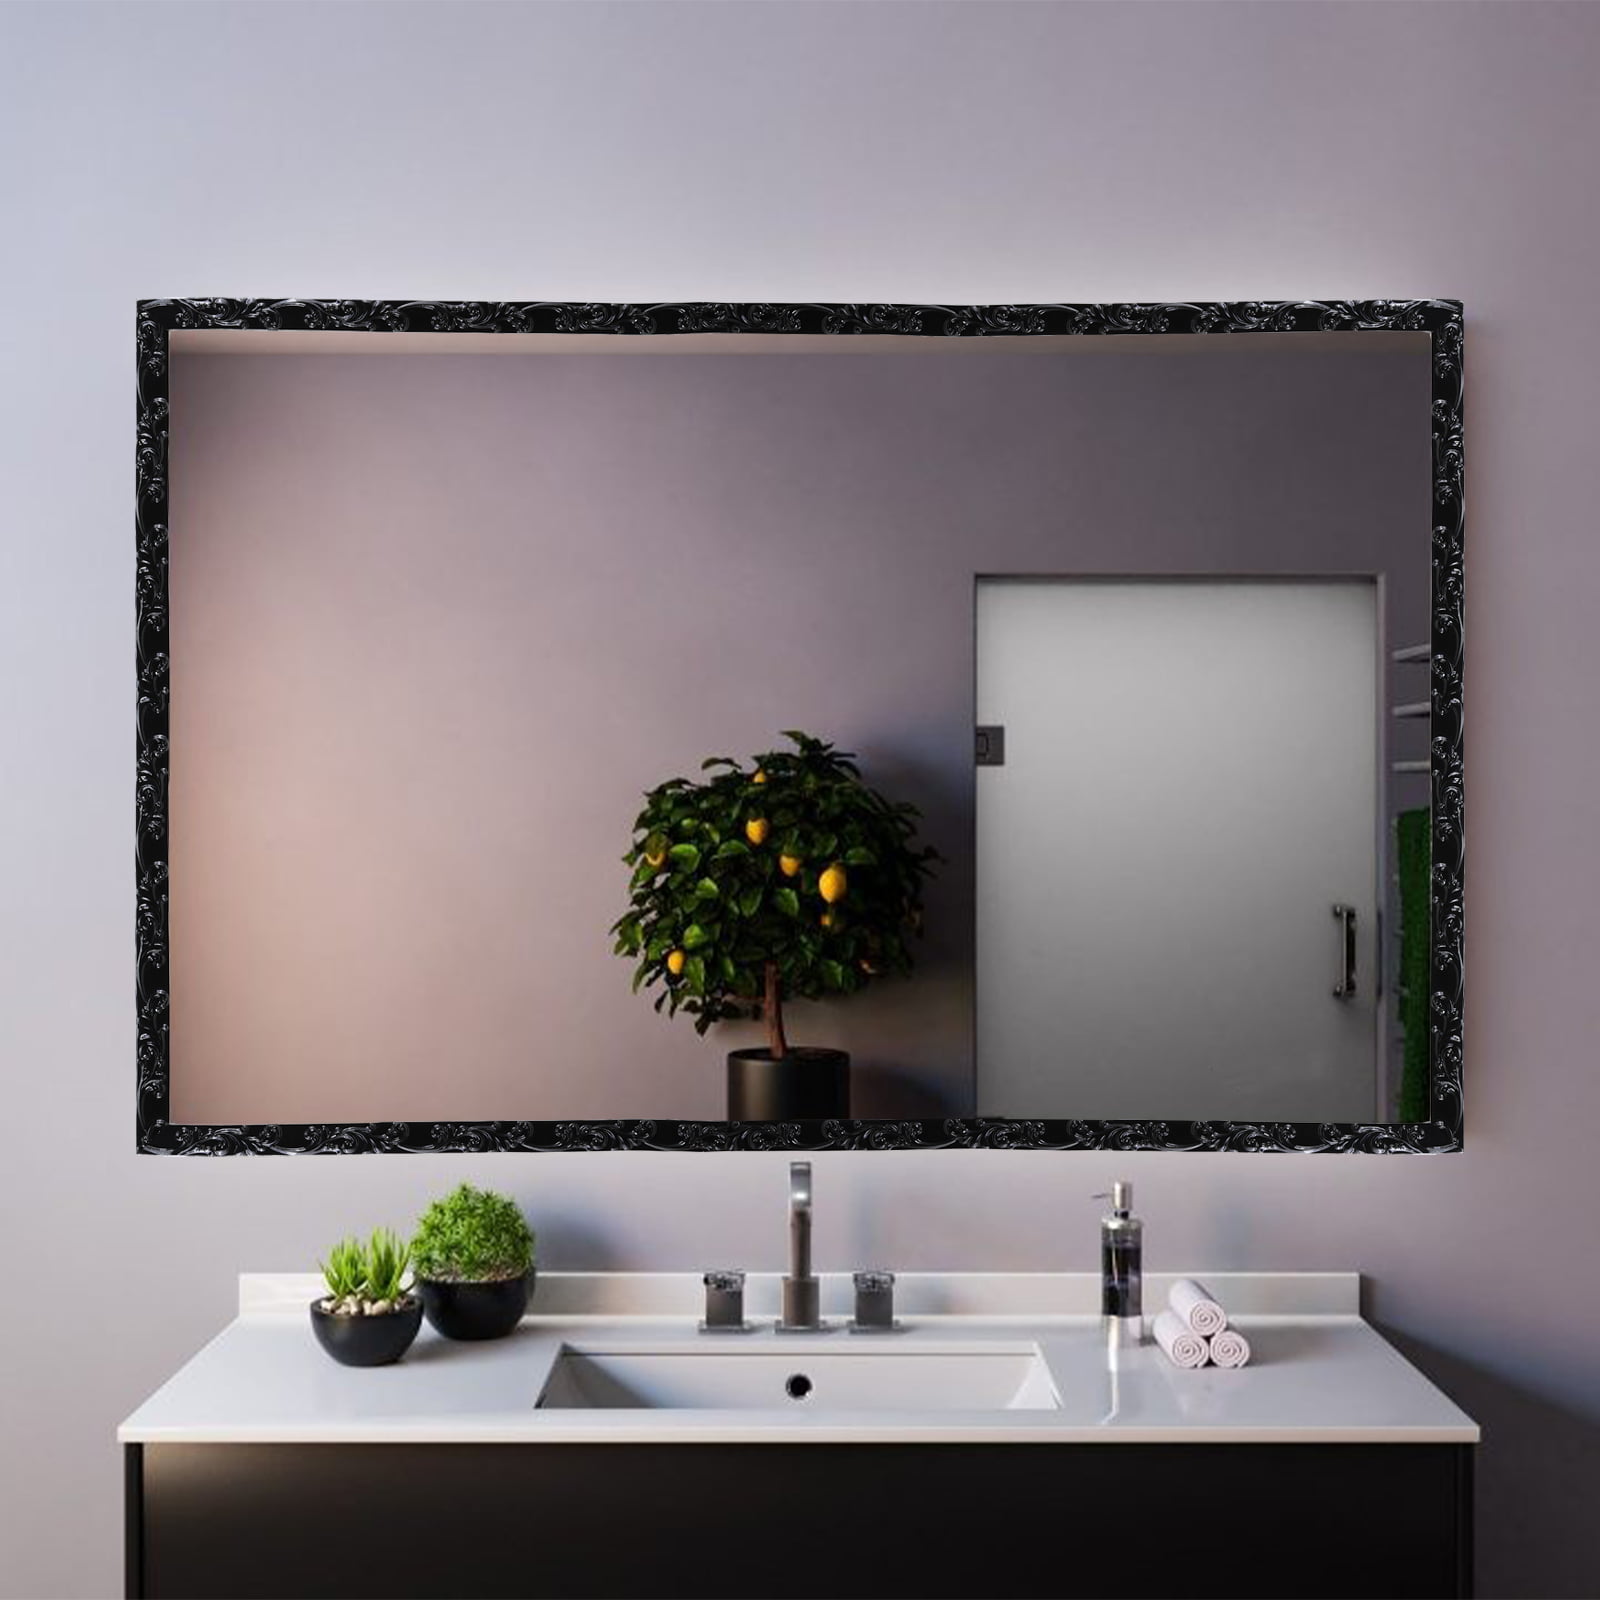 Copgge Black Mirror Trim Peel and Stick Molding Trim Self Adhesive Mirror  Border Design Flexible Picture Frame Trim Bathroom Mirror Edge Trim Cabinet